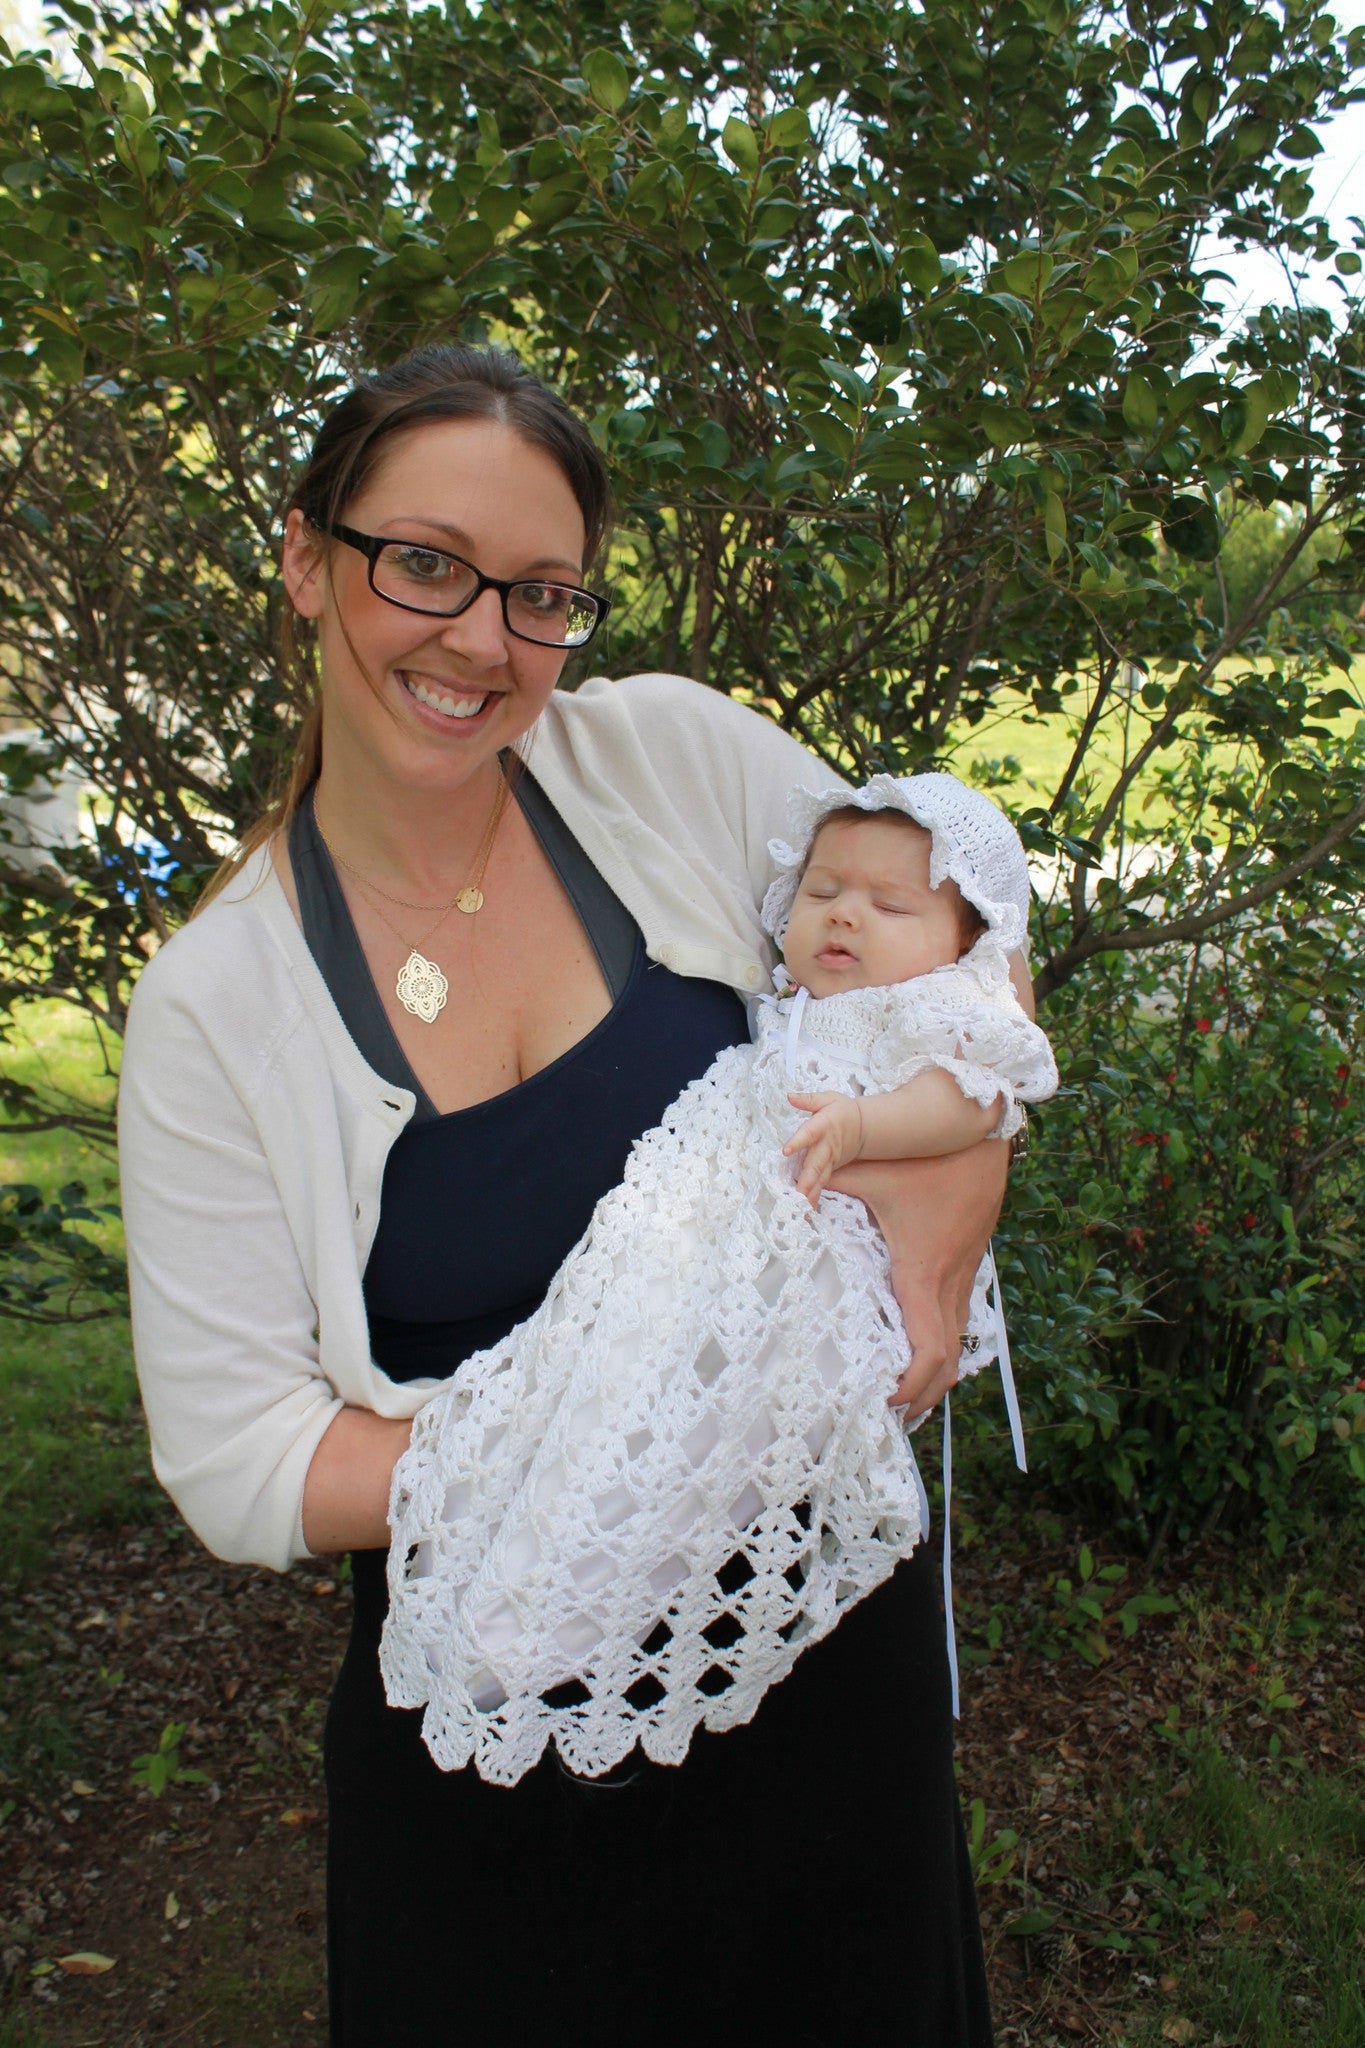 crochet baby christening dress